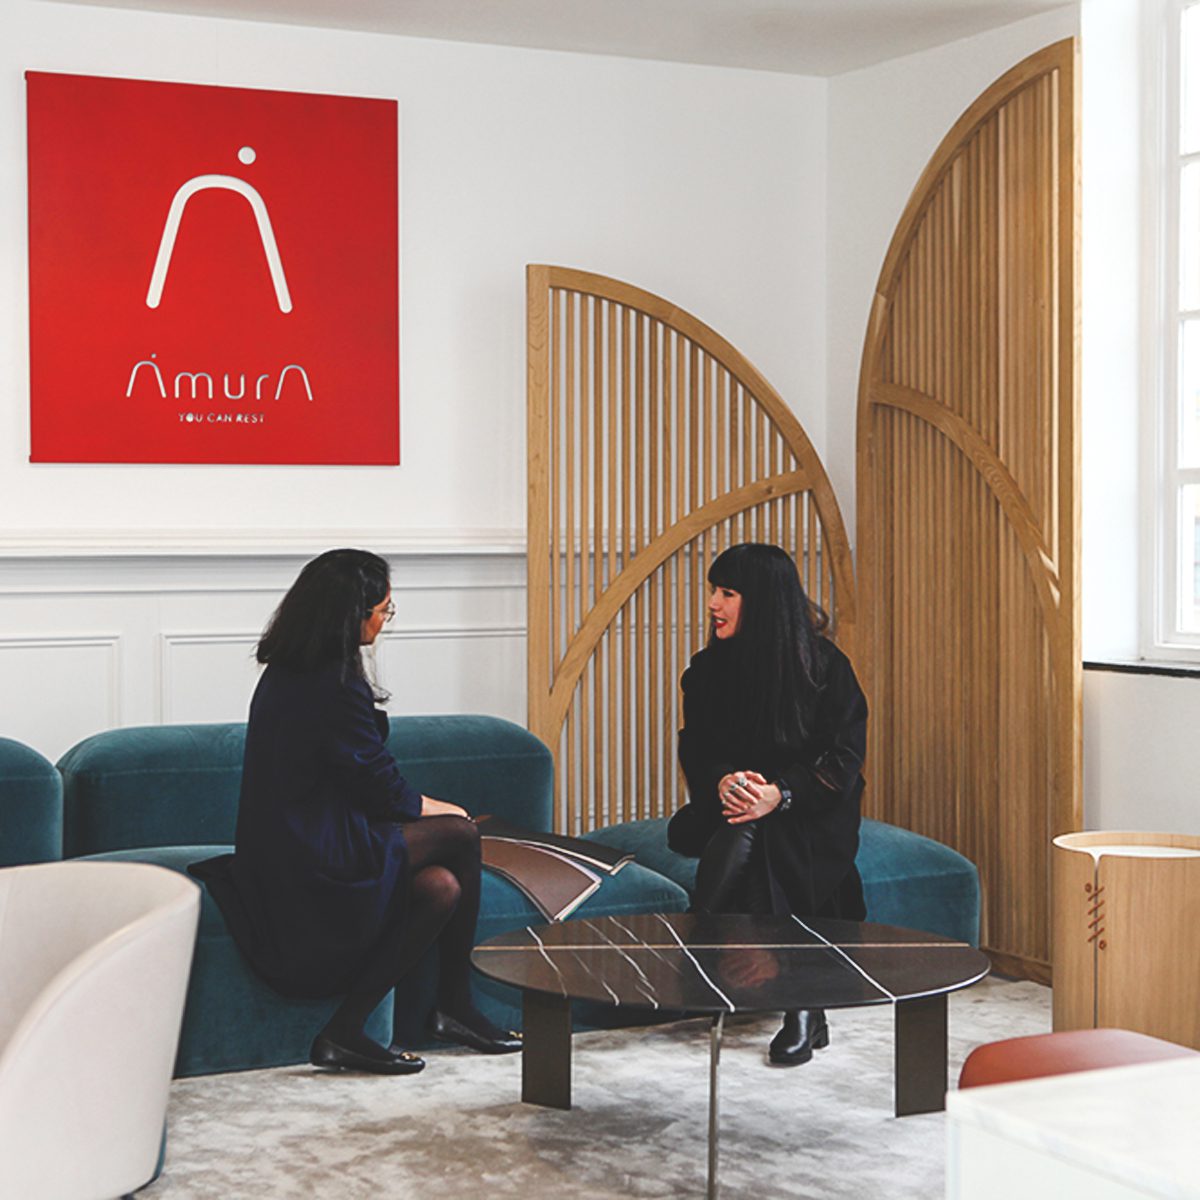 Amura • You Can - Italian design